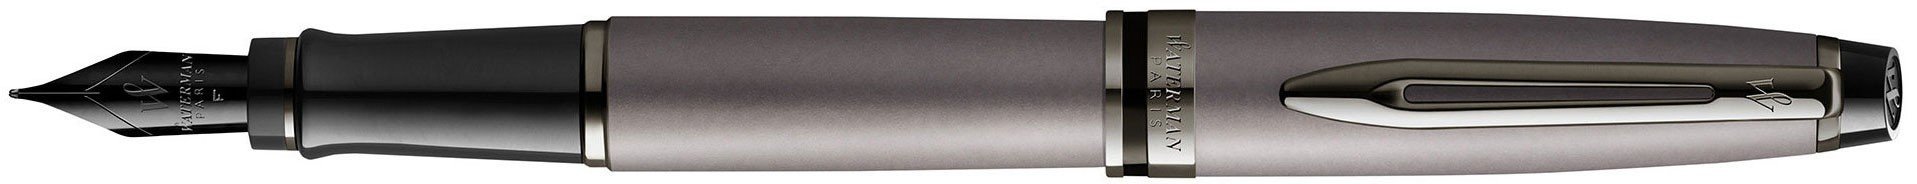 Ручка перьевая Waterman Expert DeLuxe Metallic Silver RT F перо сталь